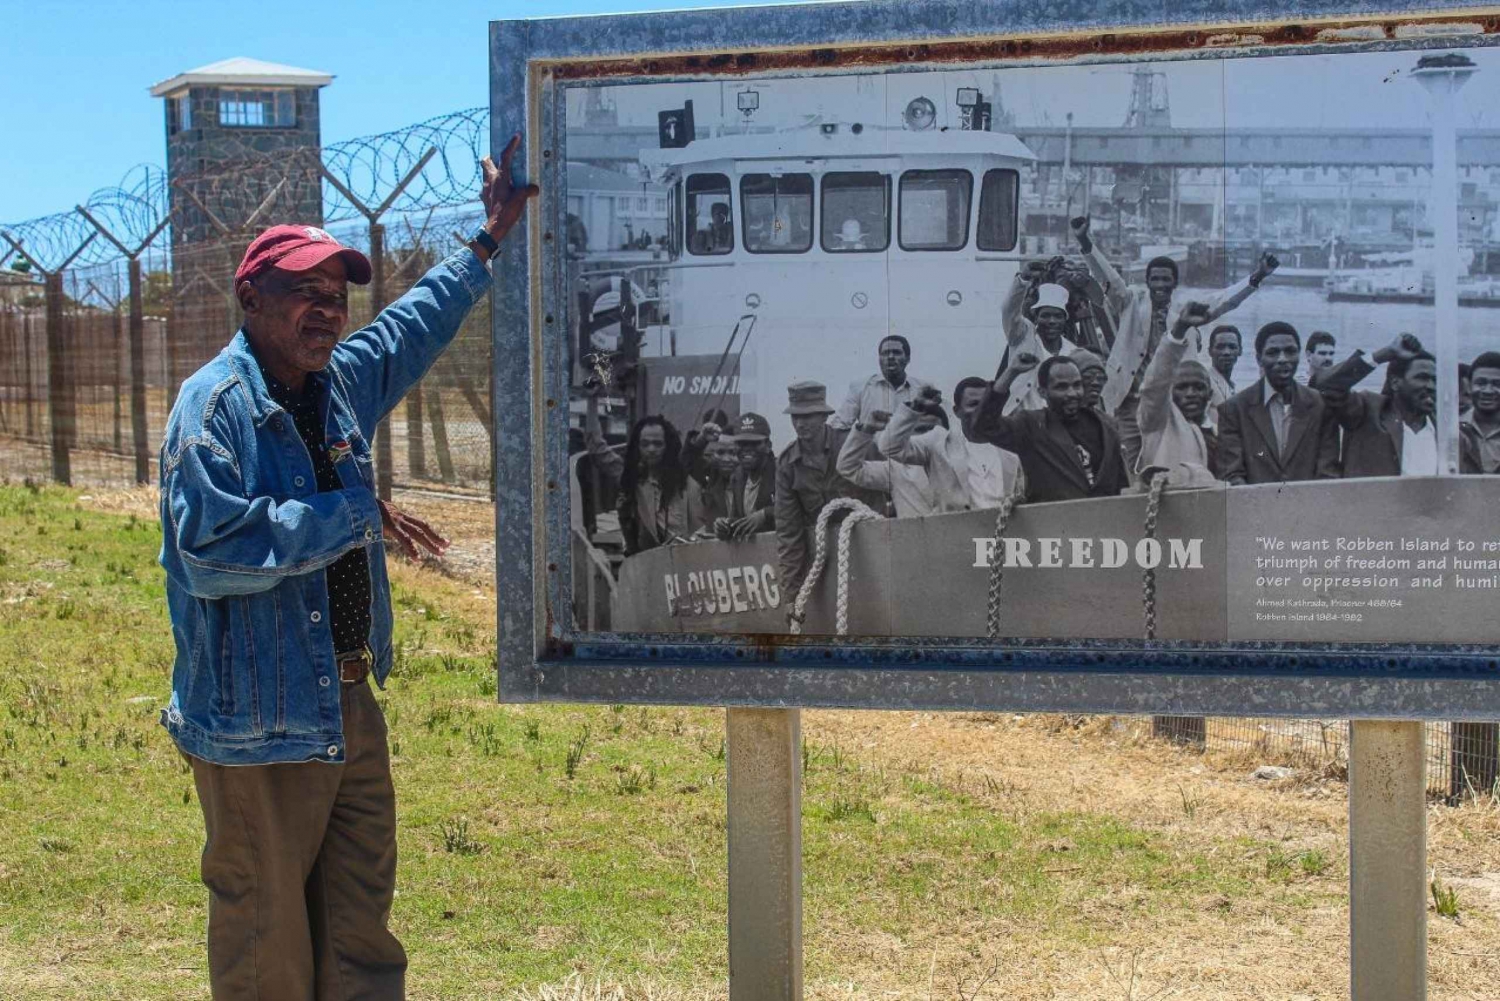 Kaapstad: Robbeneiland rondleiding tickets